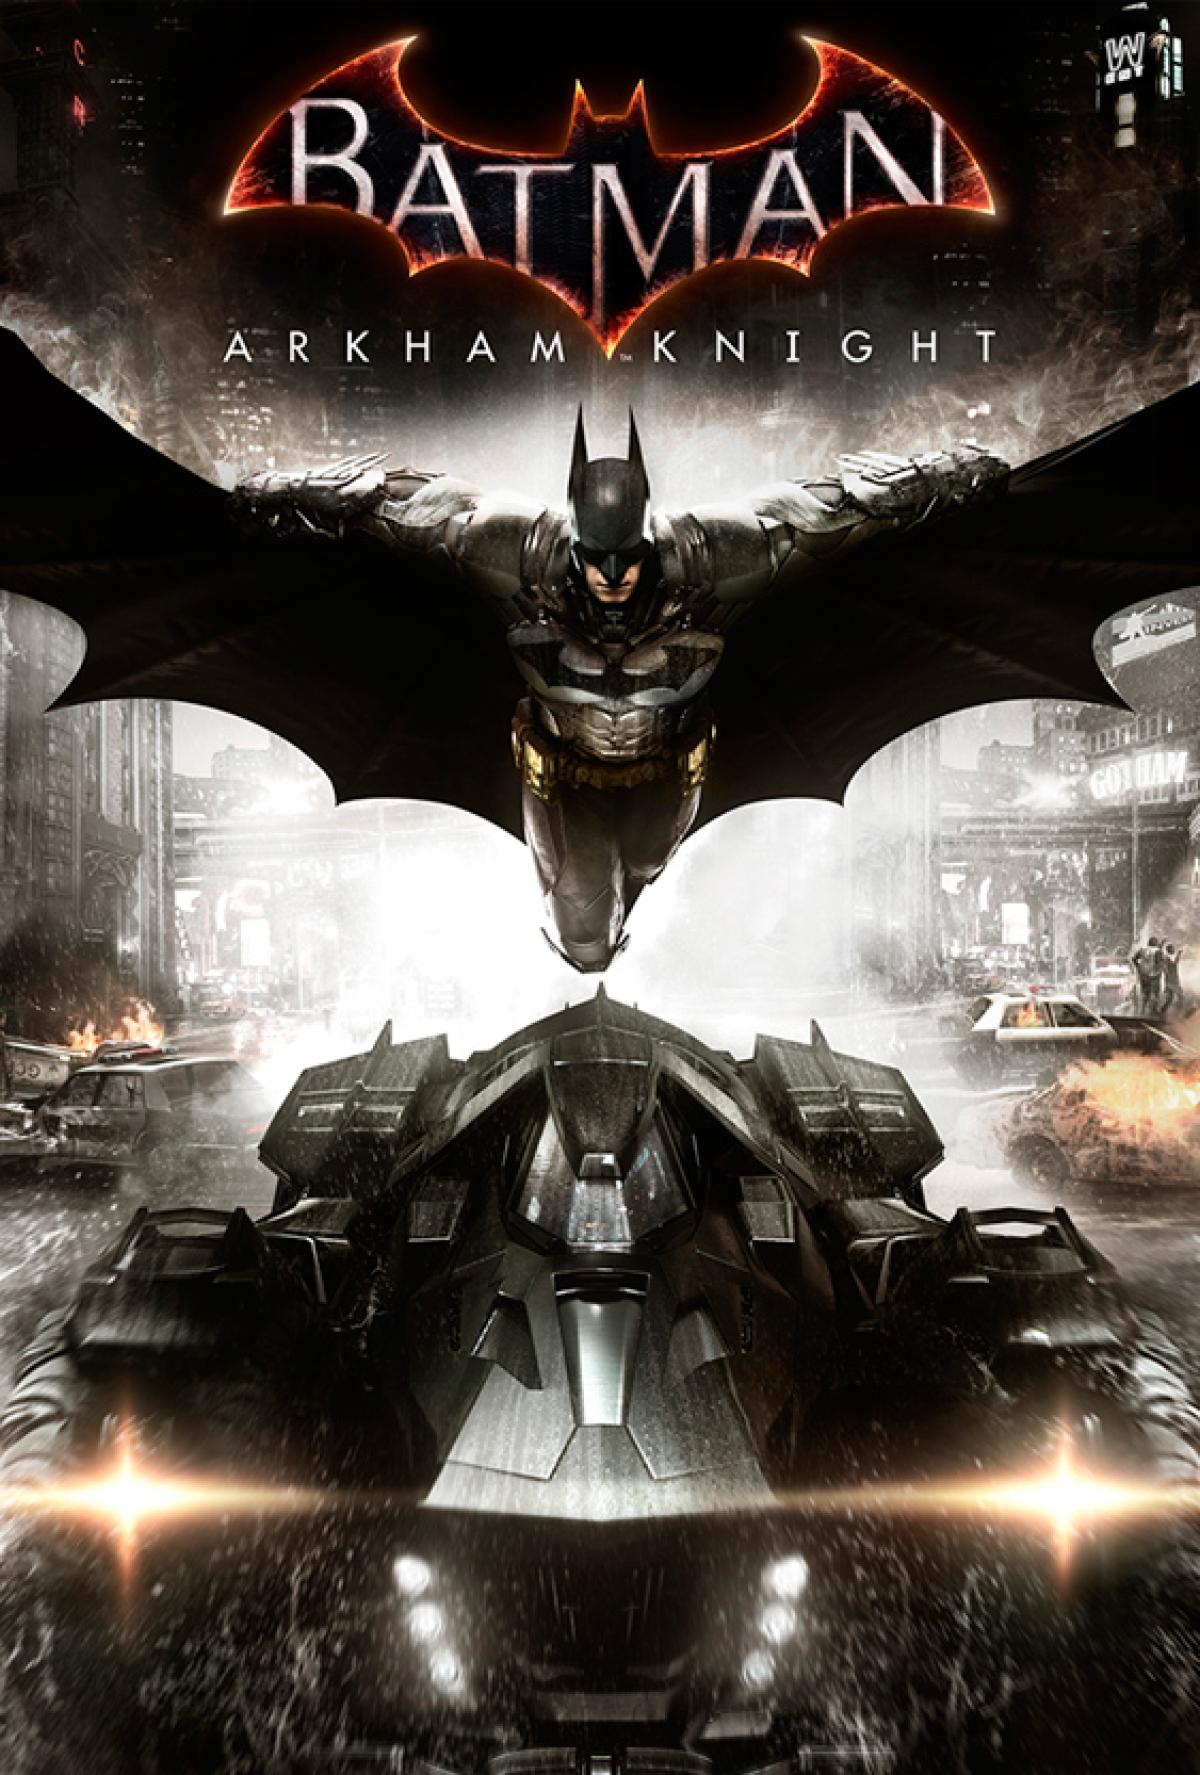 Batman Arkham Knight - Desafíos de Ra (misiones secundarias) | Hobbyconsolas